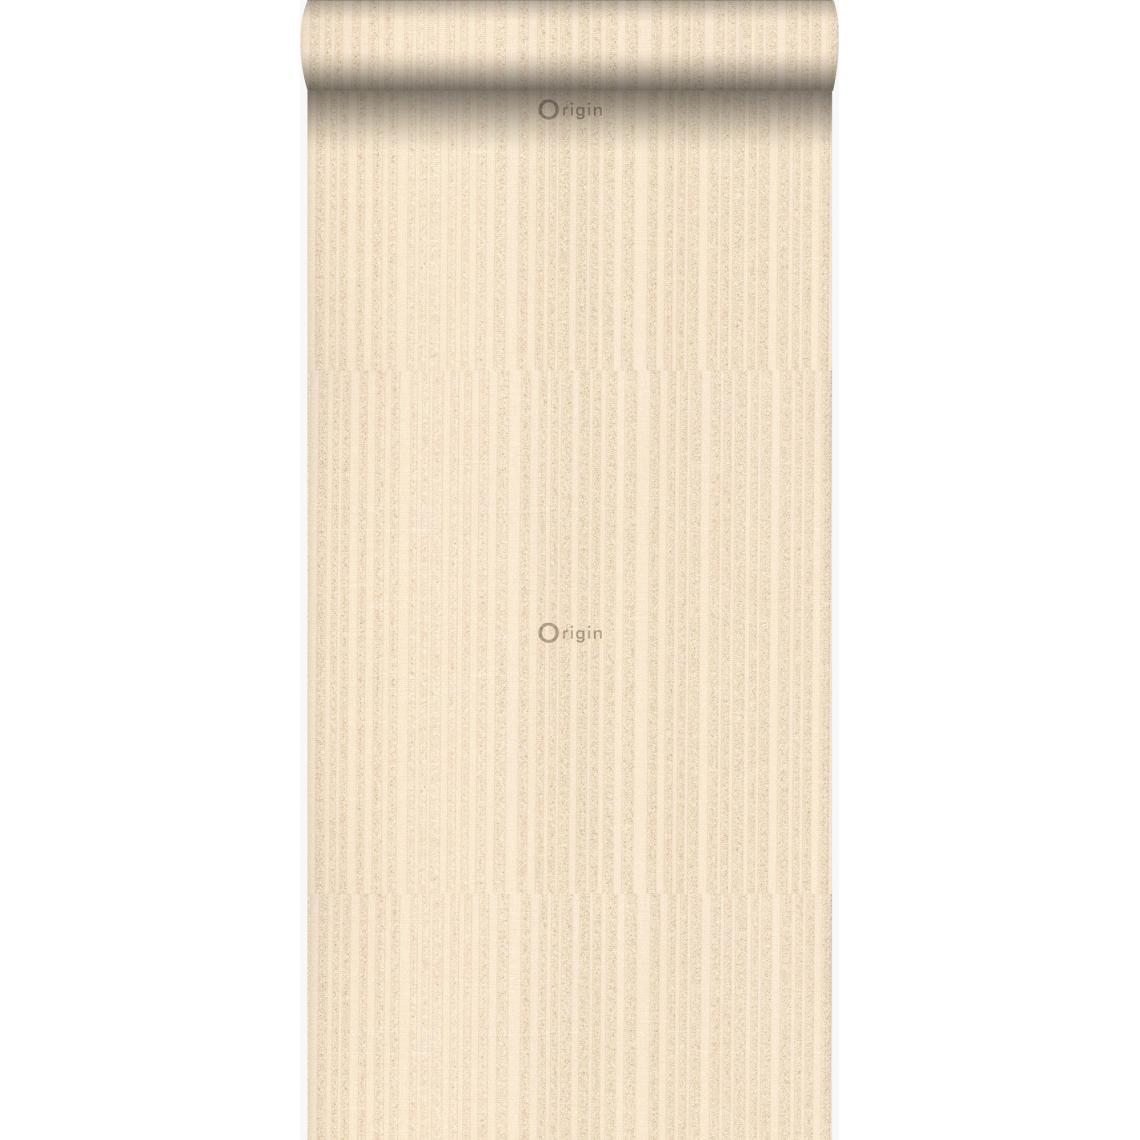 Origin - Origin papier peint rayures fines beige champagne - 306741 - 70 cm x 10,05 m - Papier peint